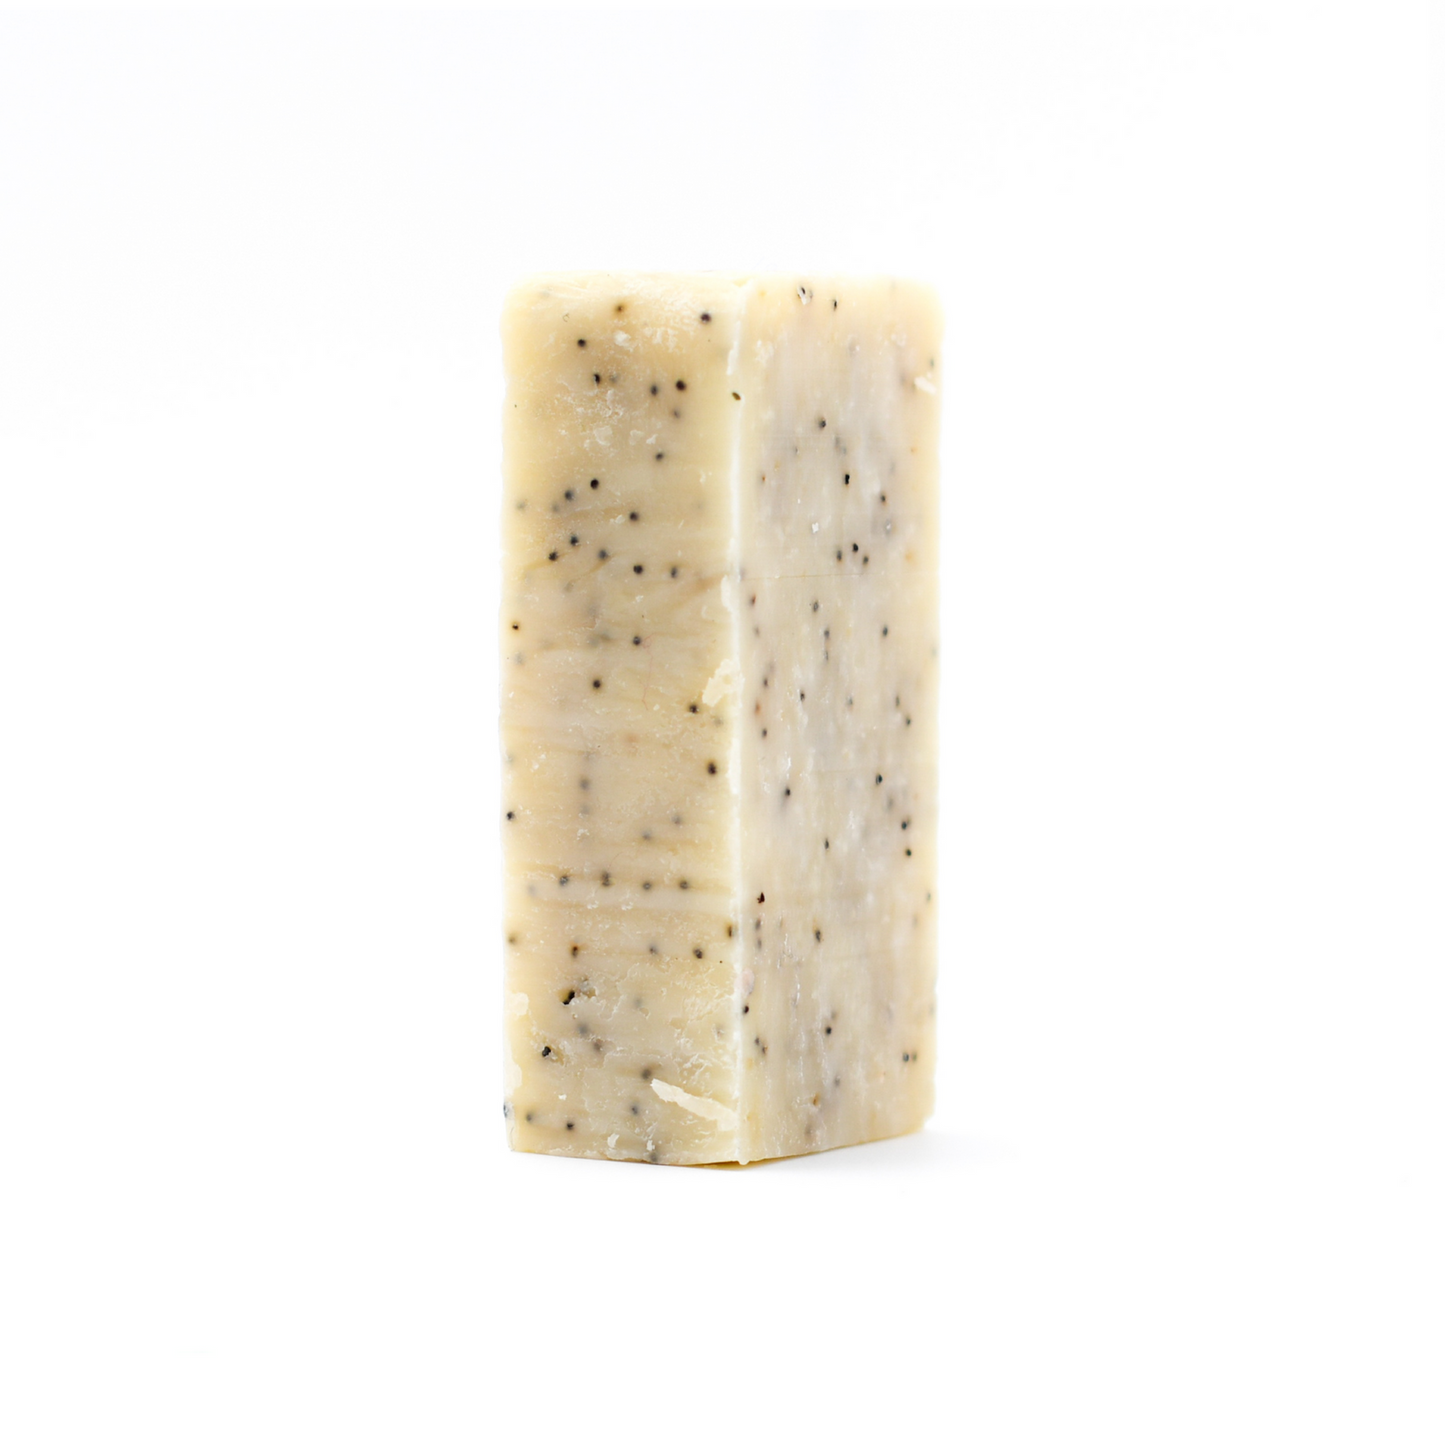 Bar Soap, Galaxy, hint of black licorice, exfoliating